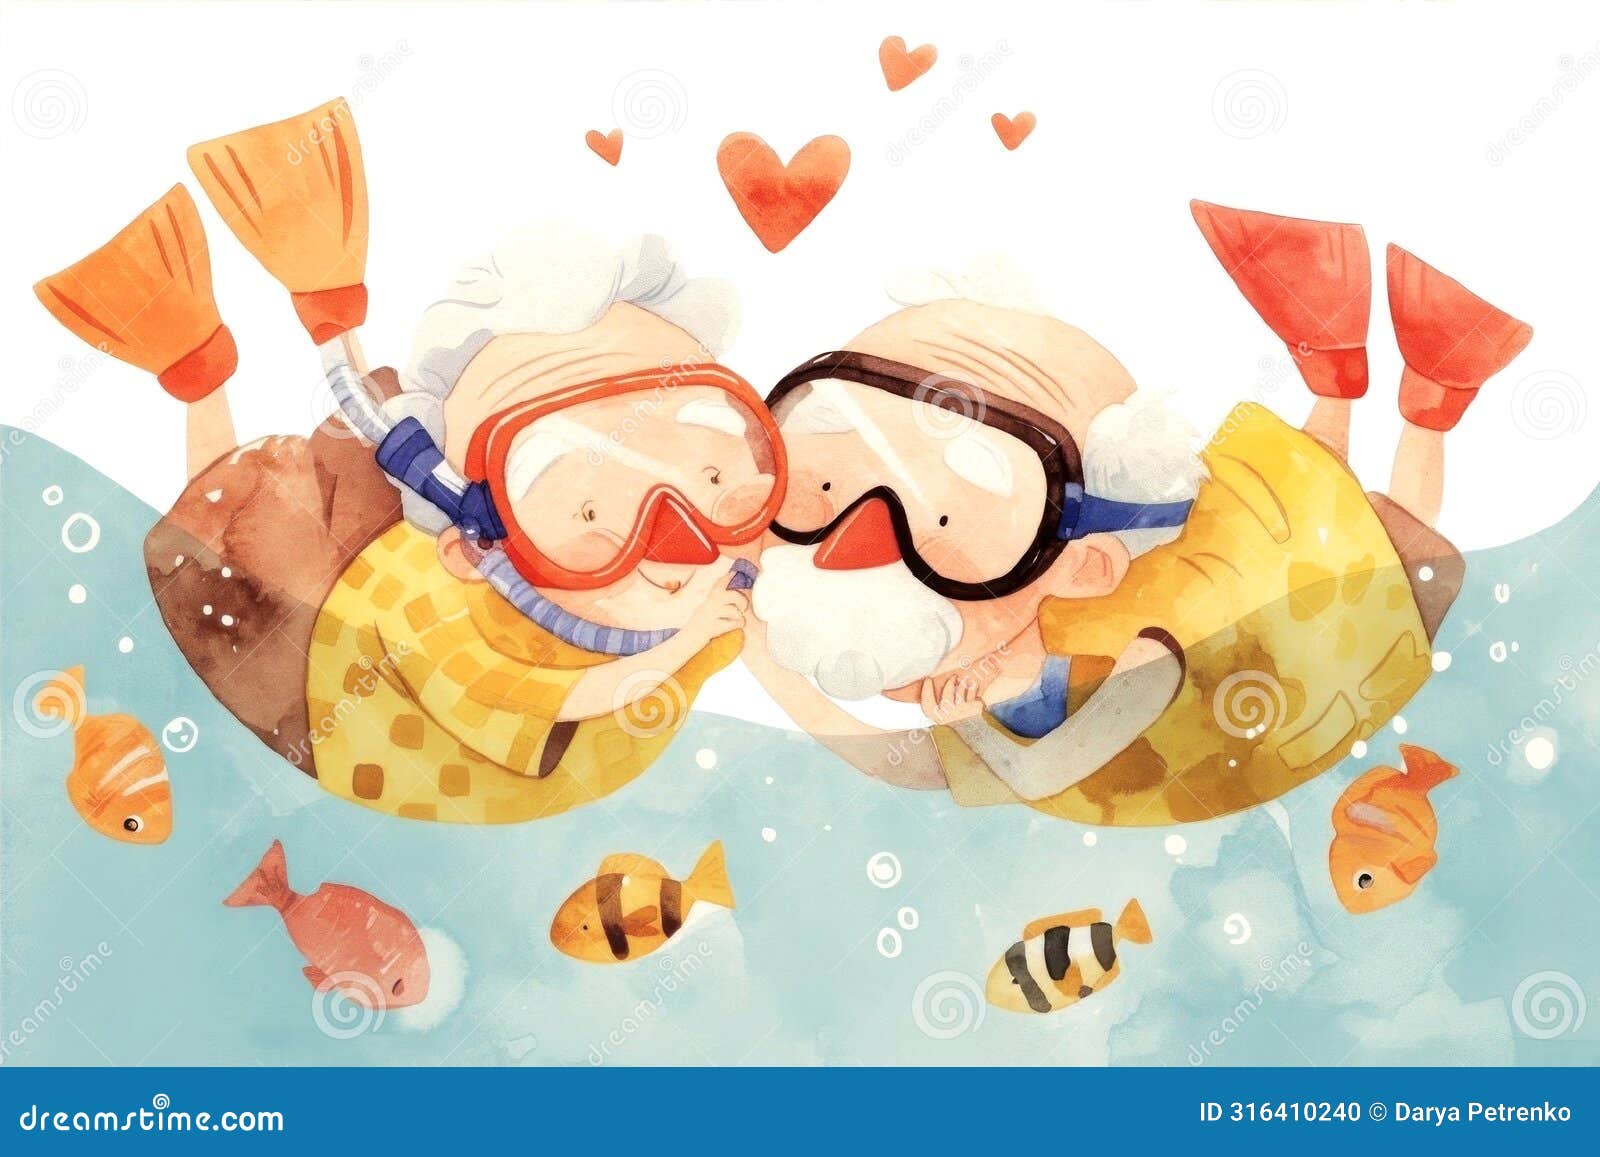 charming artwork capturing a sweet moment between an elderly couple snorkeling